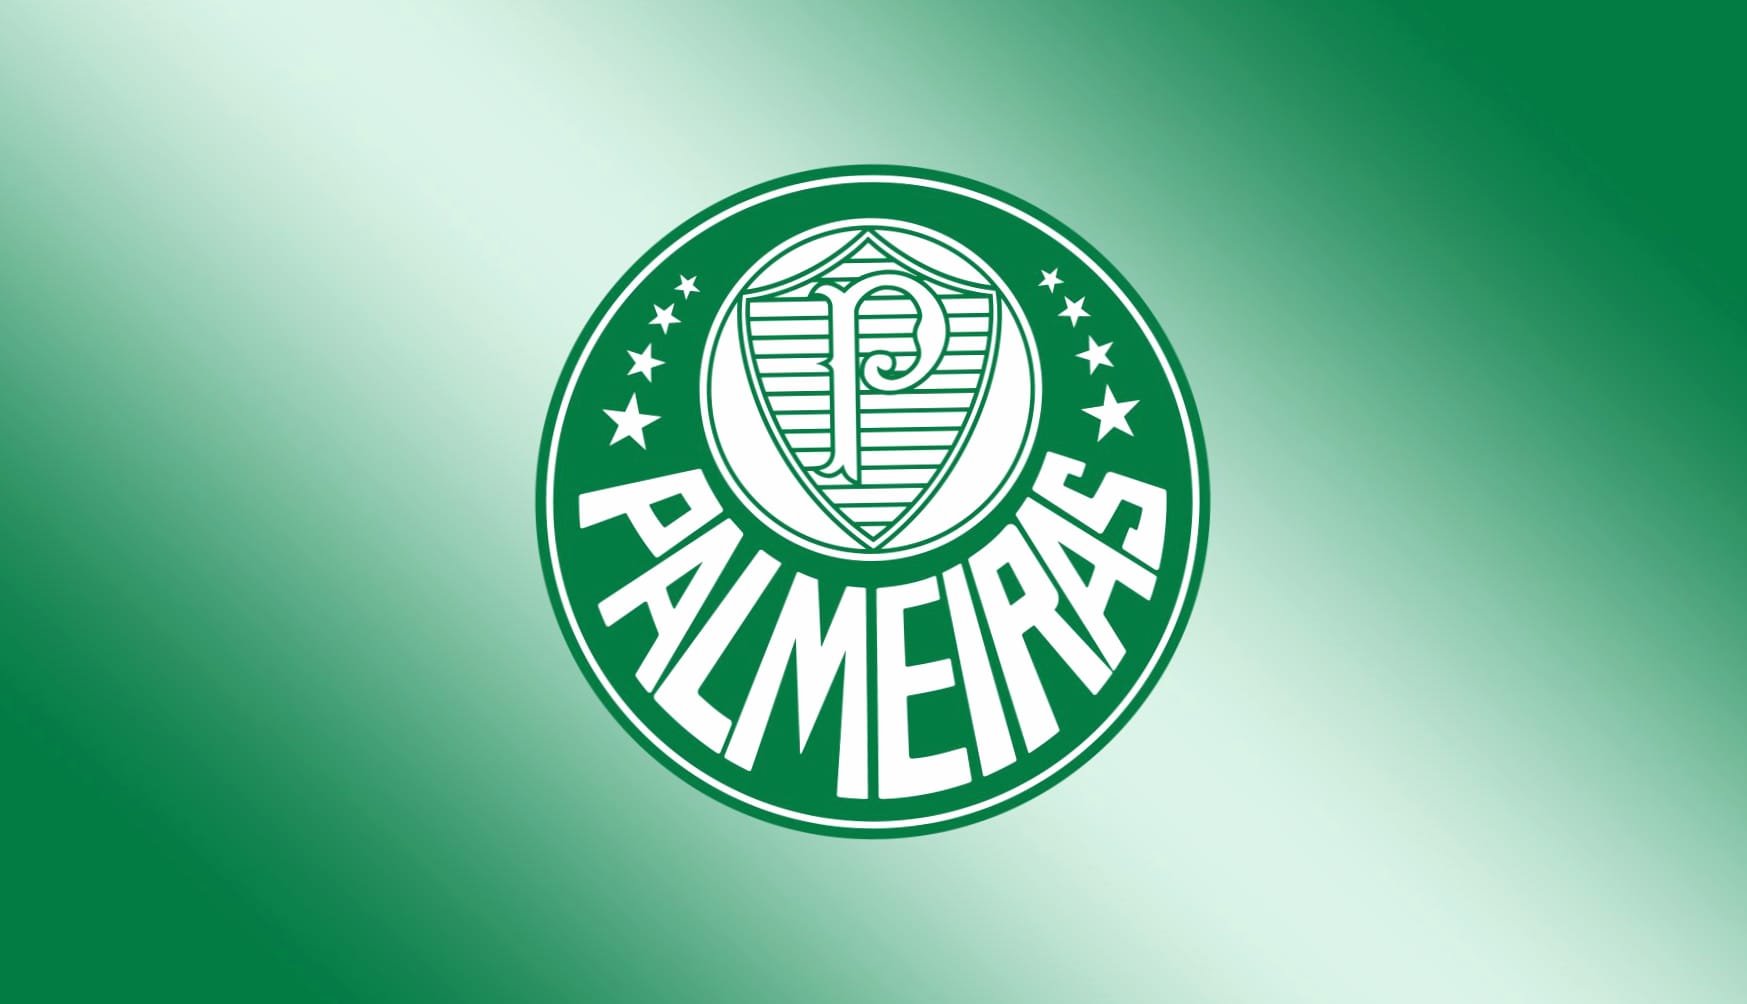 Sociedade Esportiva Palmeiras at 640 x 960 iPhone 4 size wallpapers HD quality